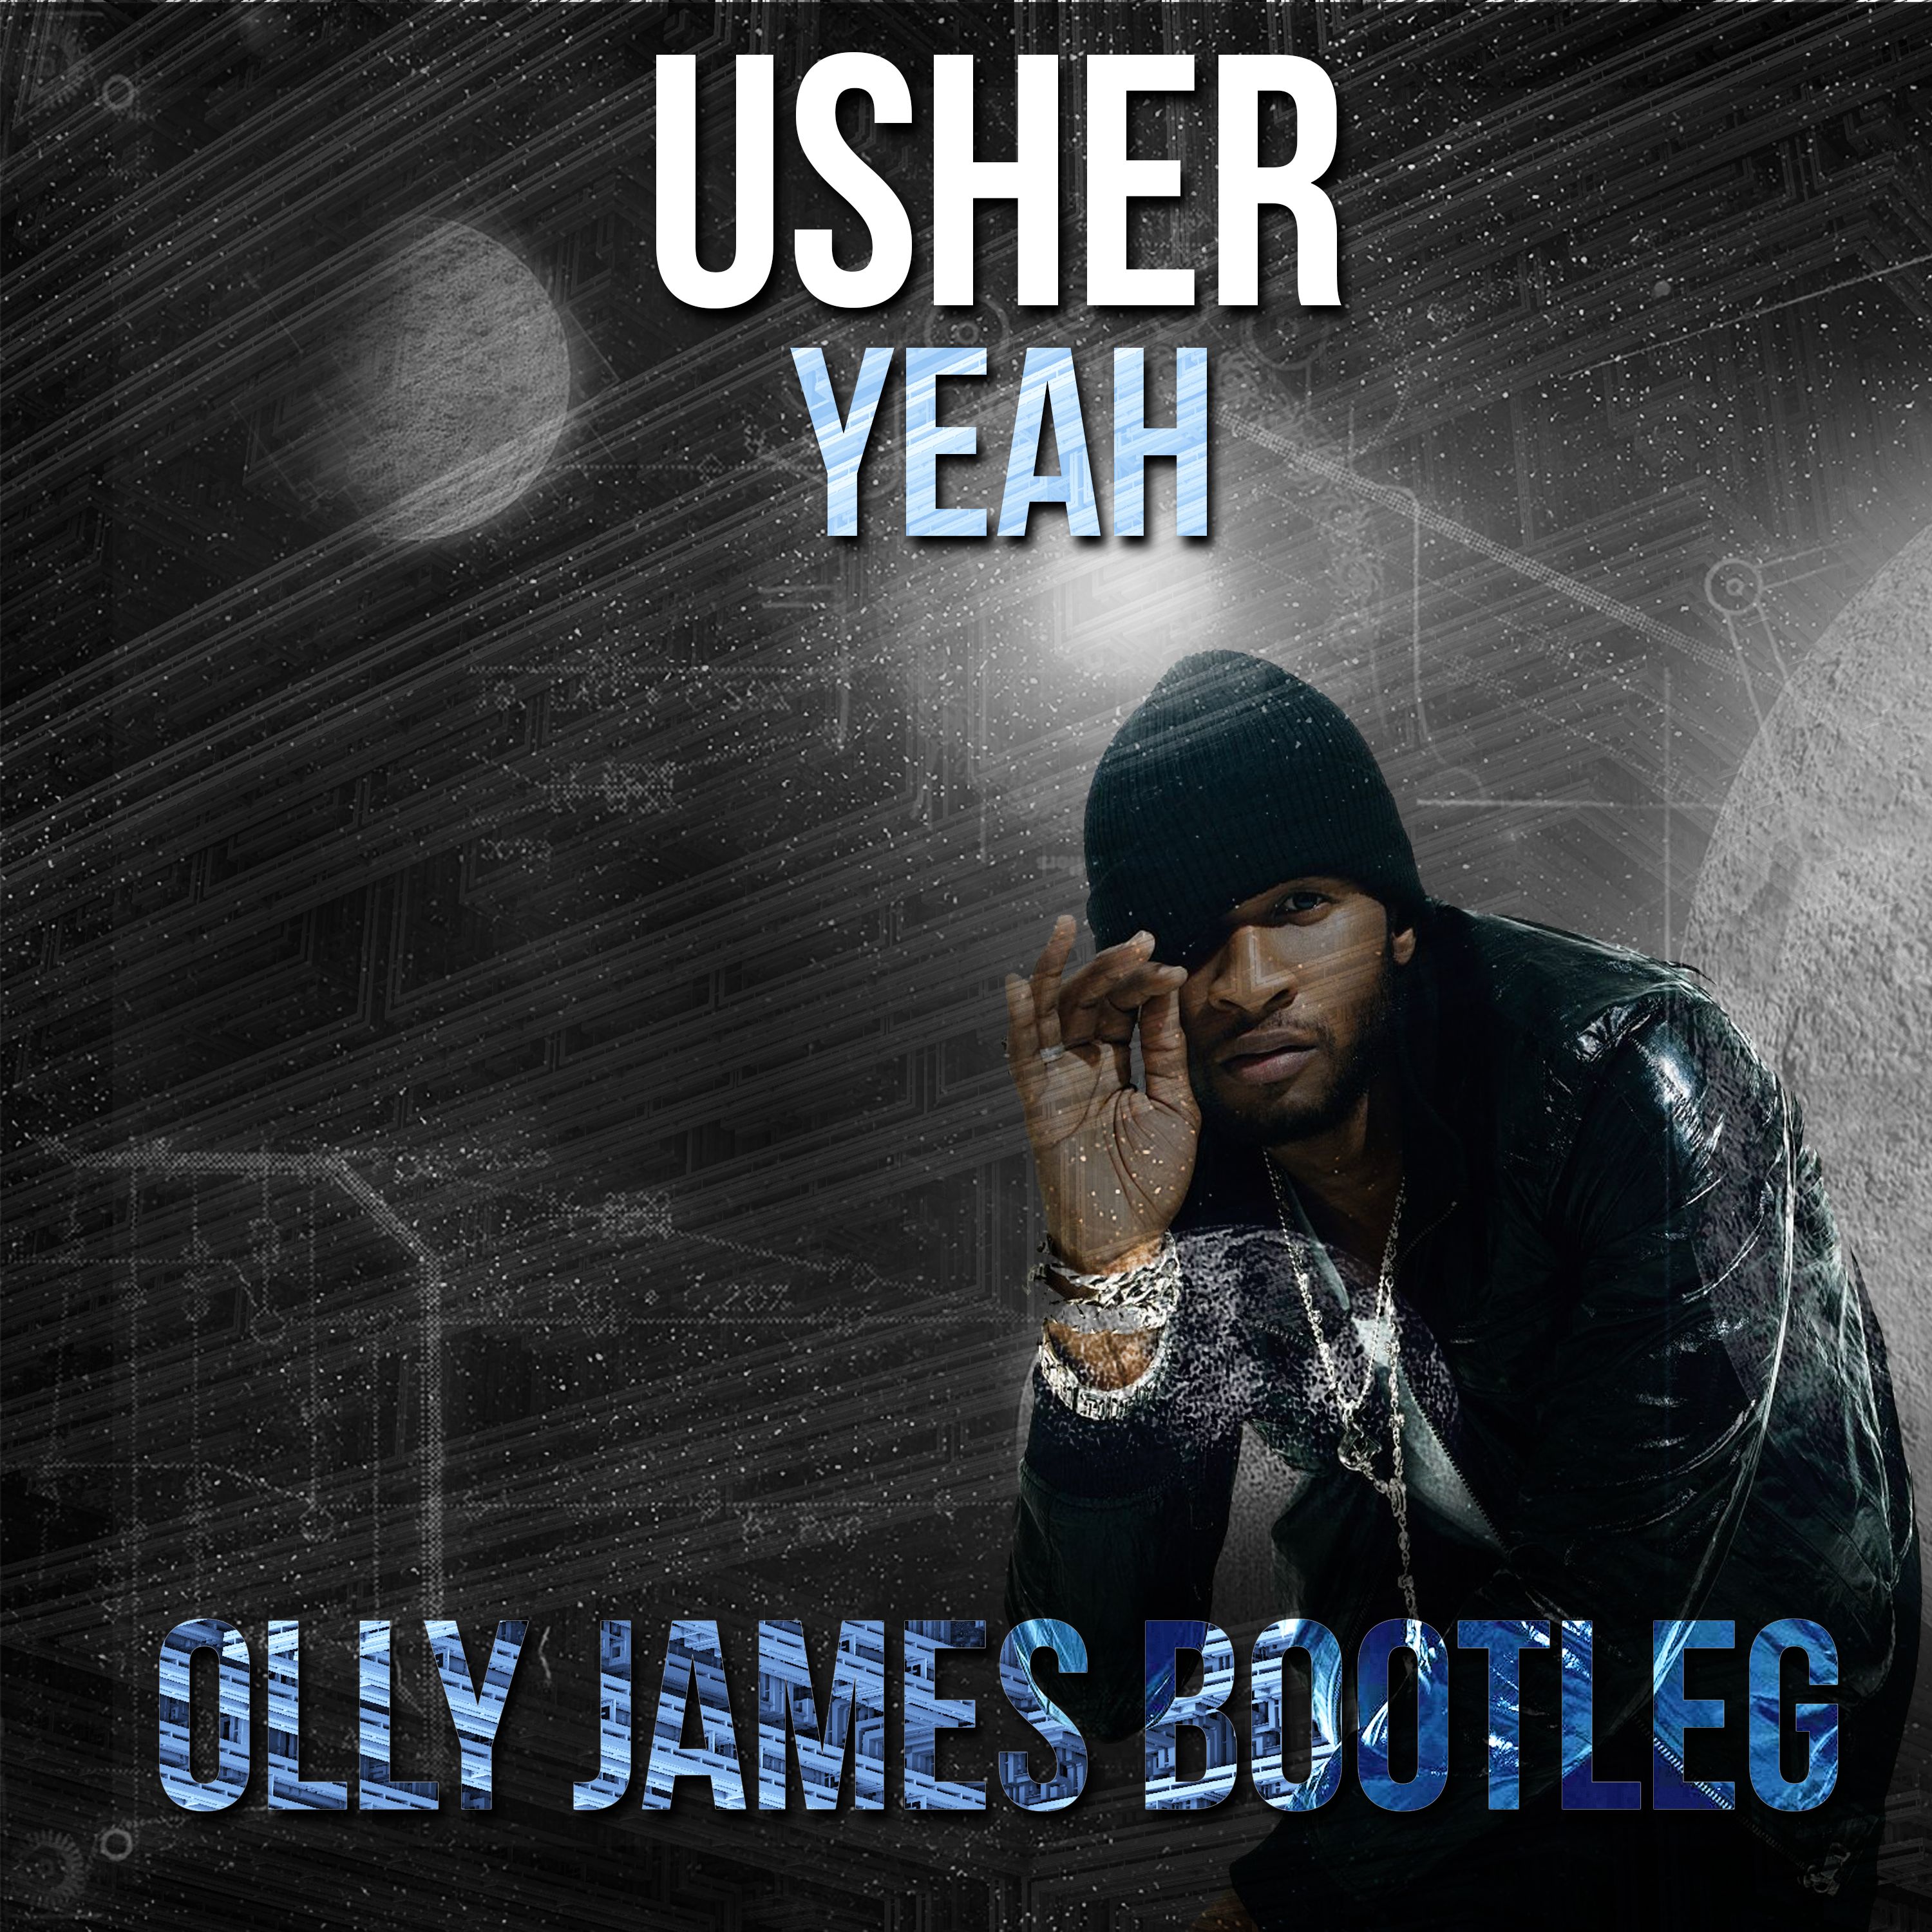 डाउनलोड करा Usher - Yeah (Olly James Bootleg)